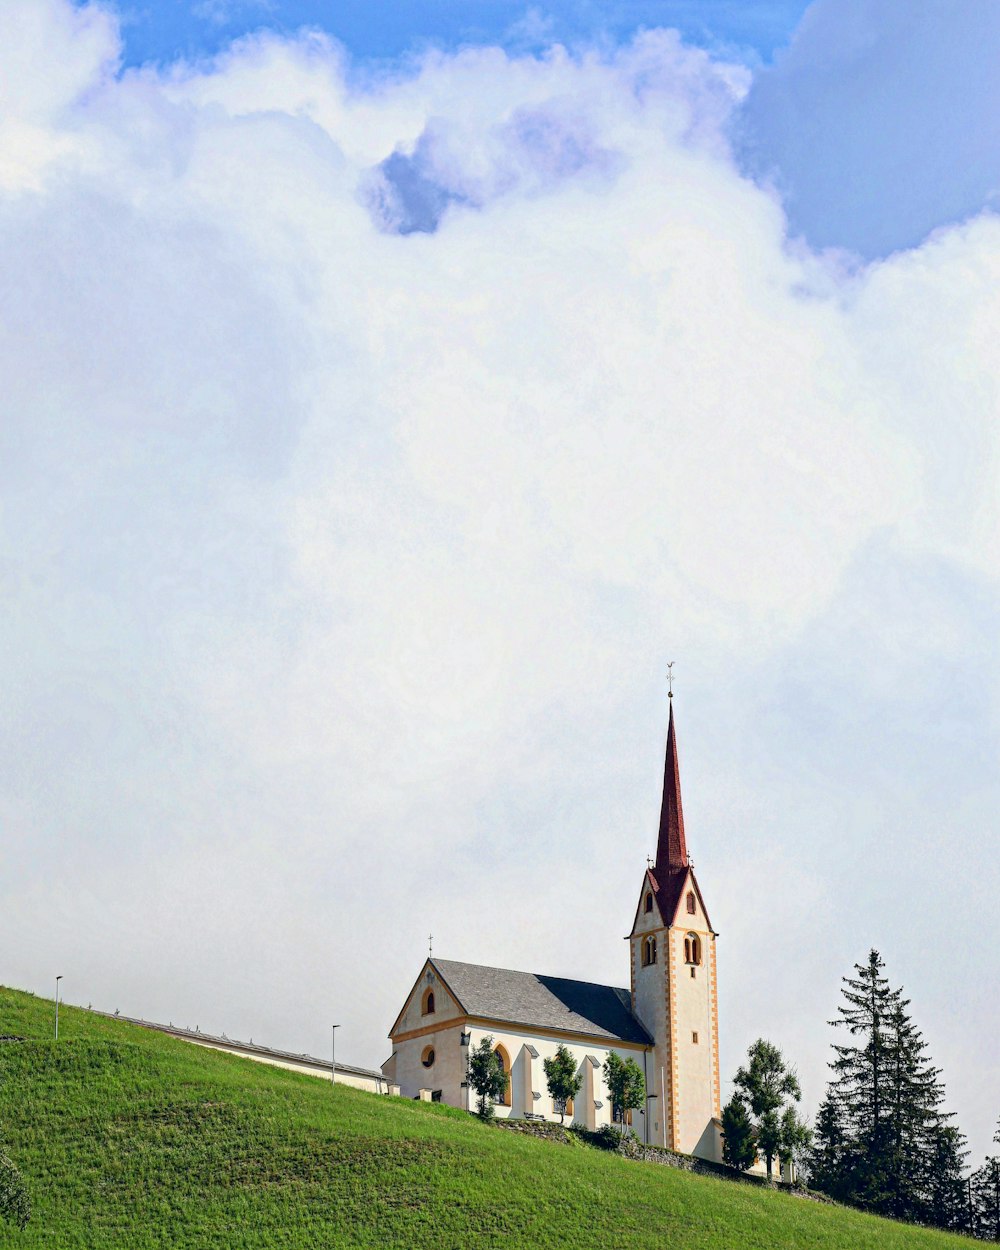 a church on a hill